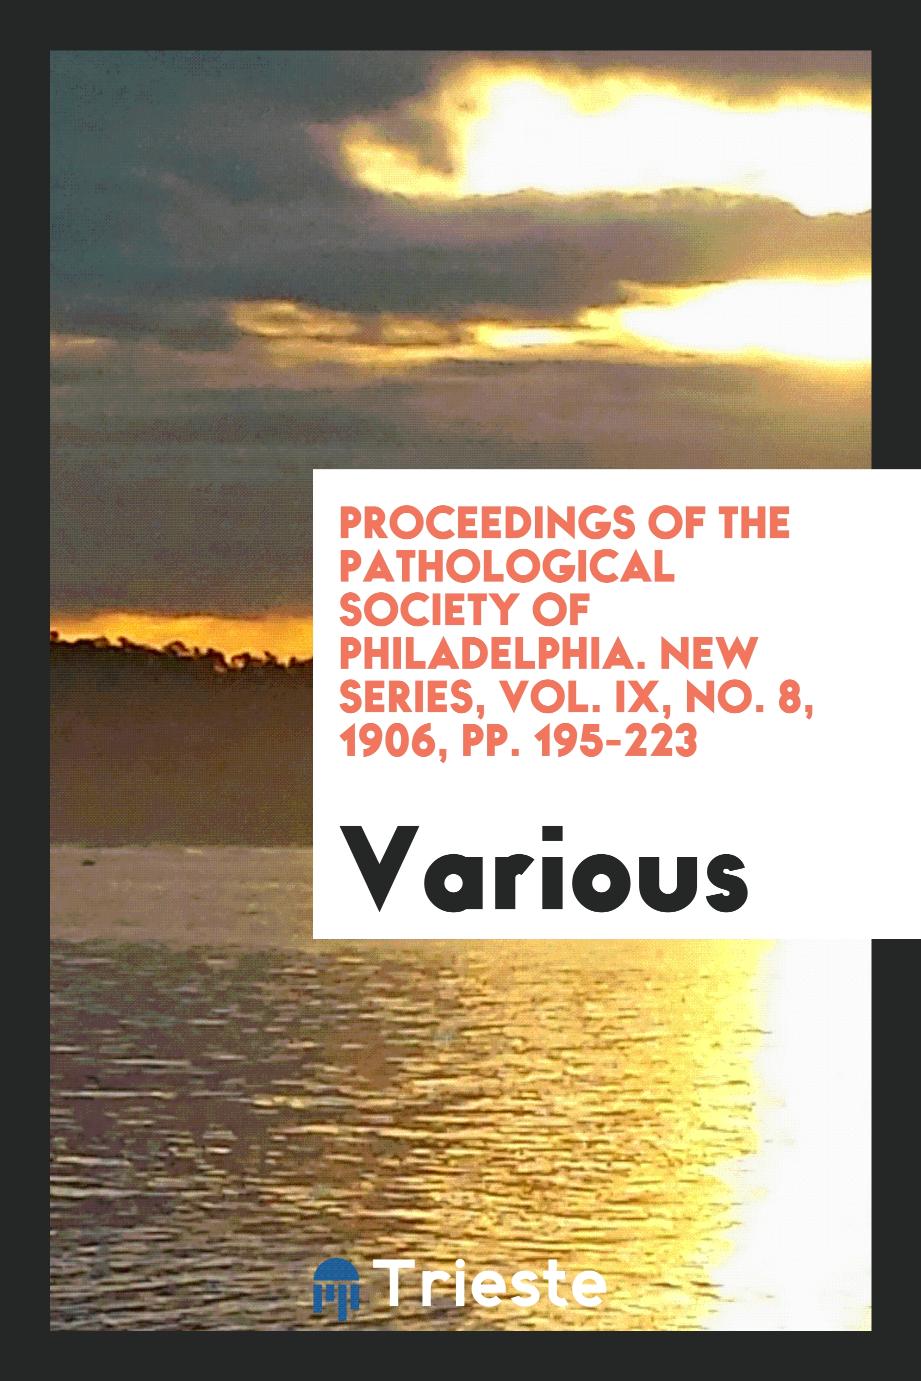 Proceedings of the Pathological Society of Philadelphia. New Series, Vol. IX, No. 8, 1906, pp. 195-223